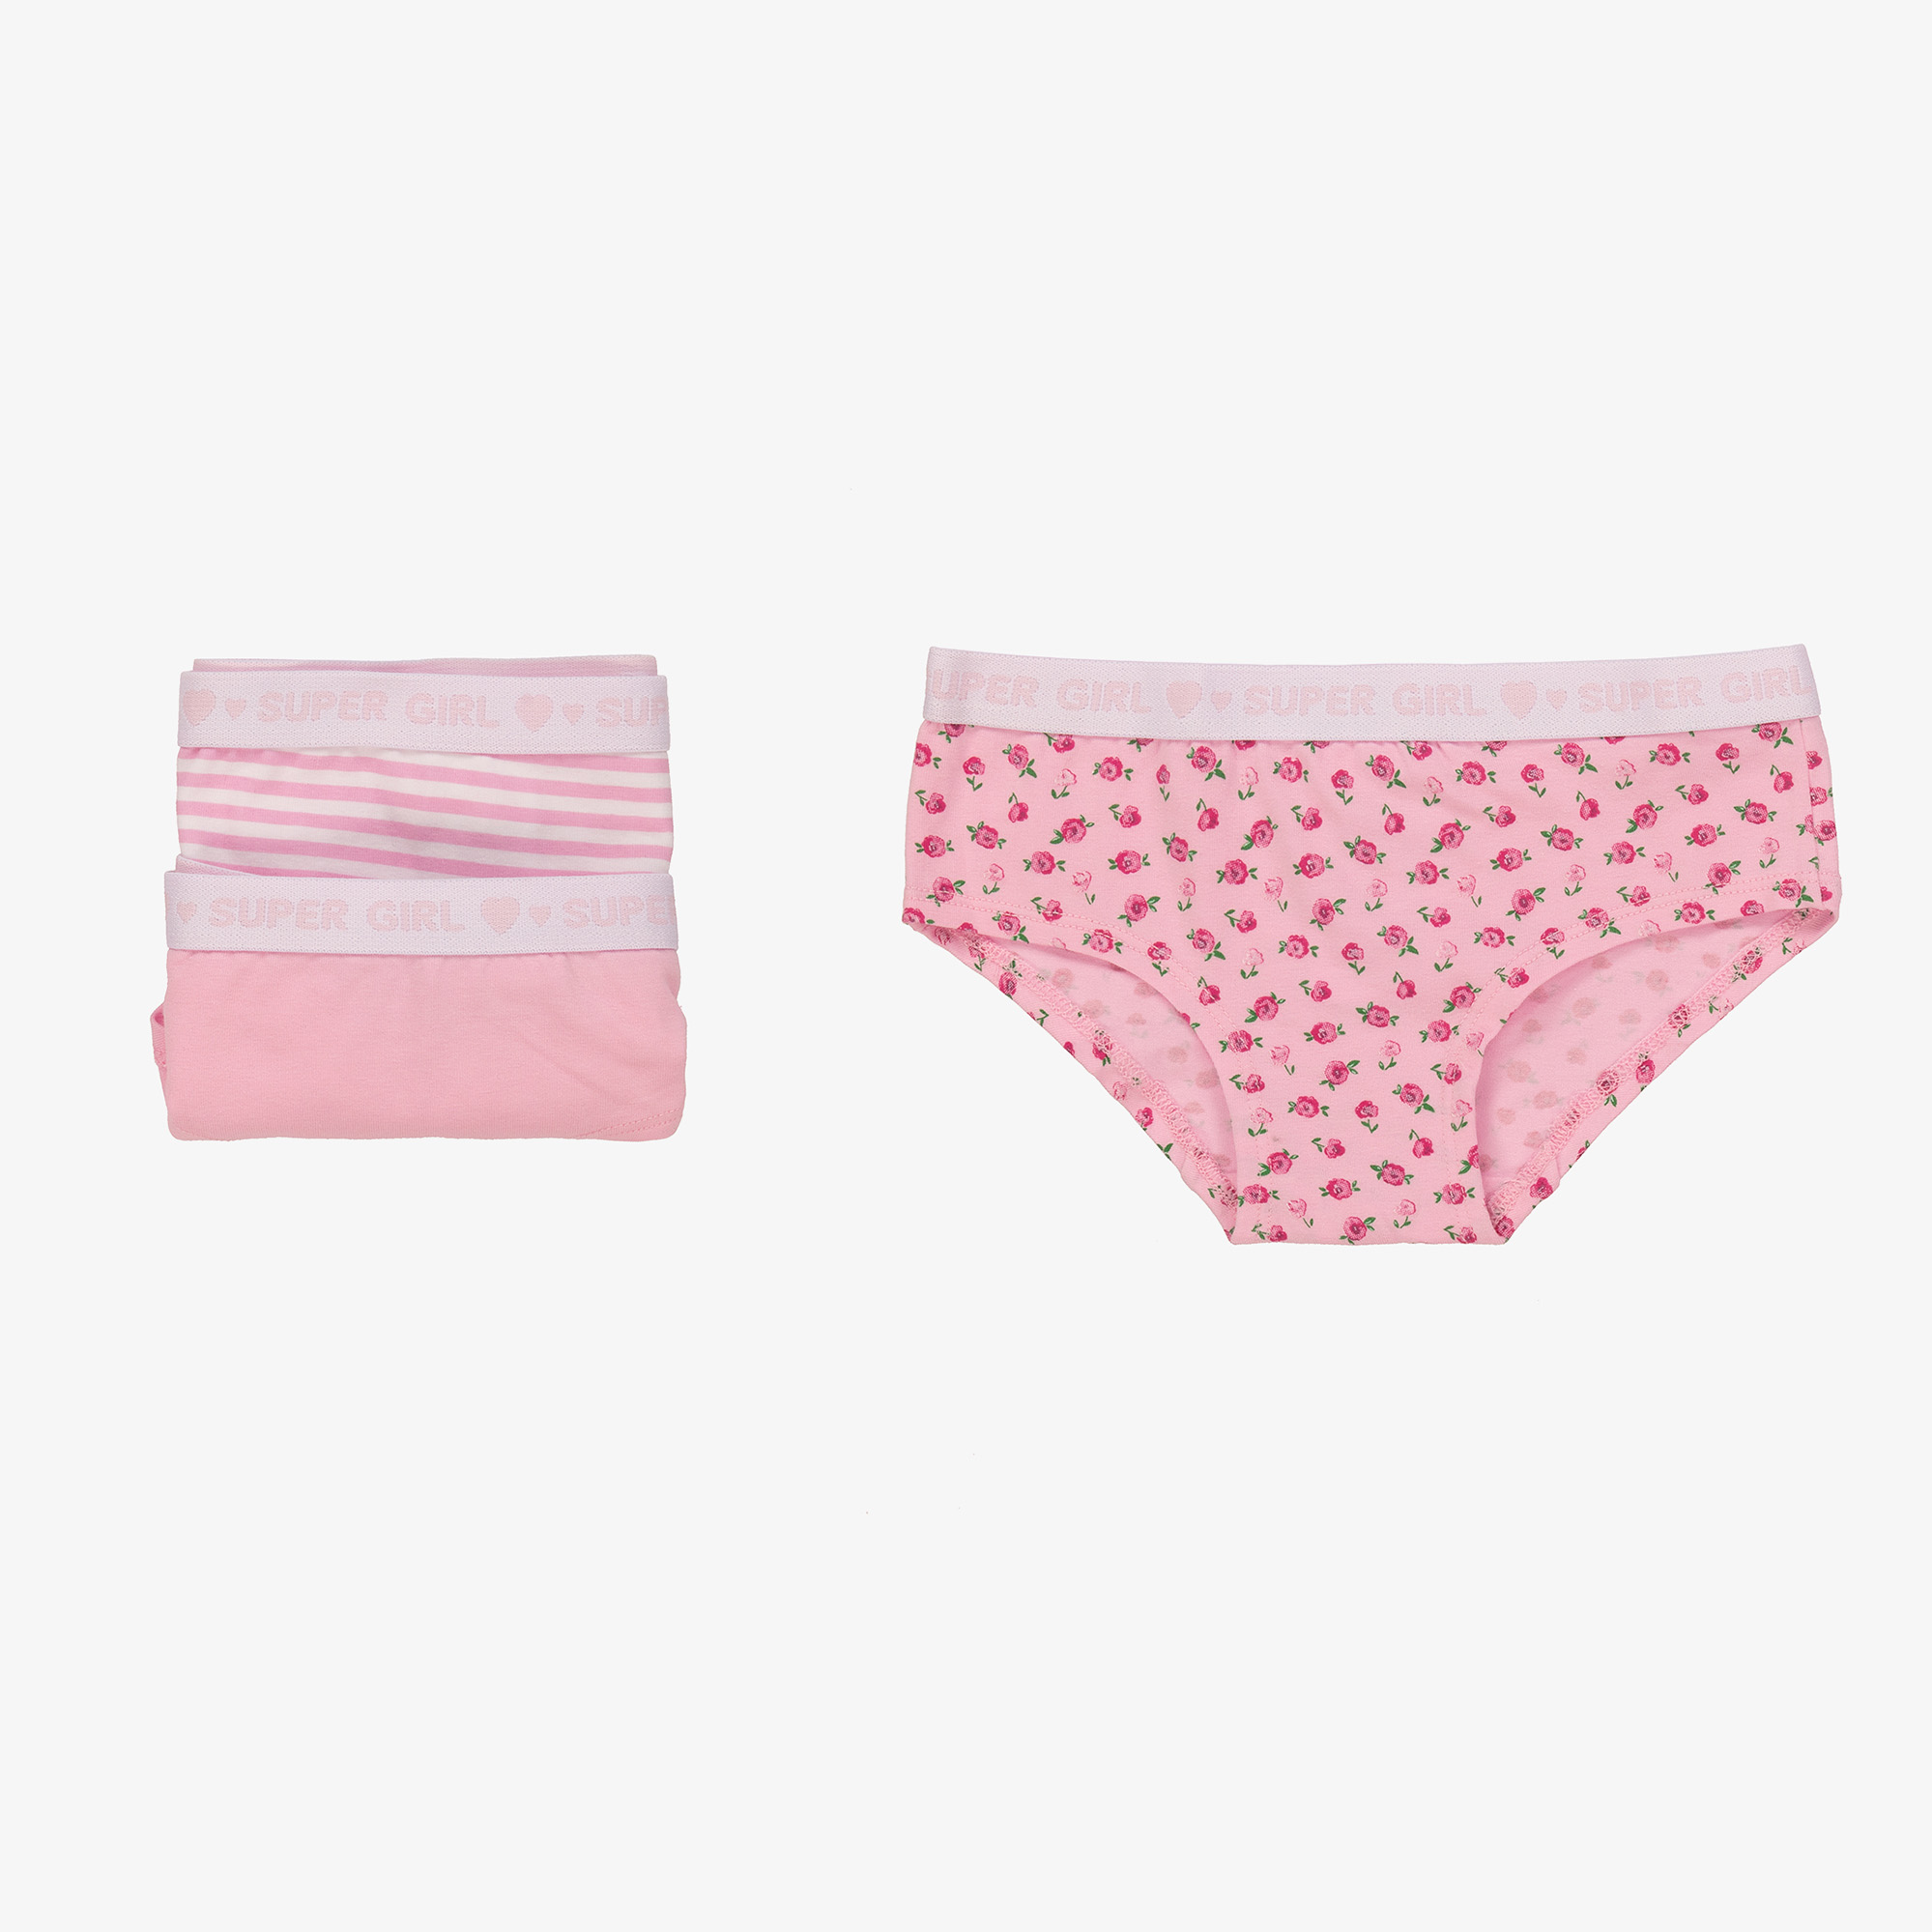 Wholesale Girls' Cotton Panties 3-Pcs per Pack (96 Packs)